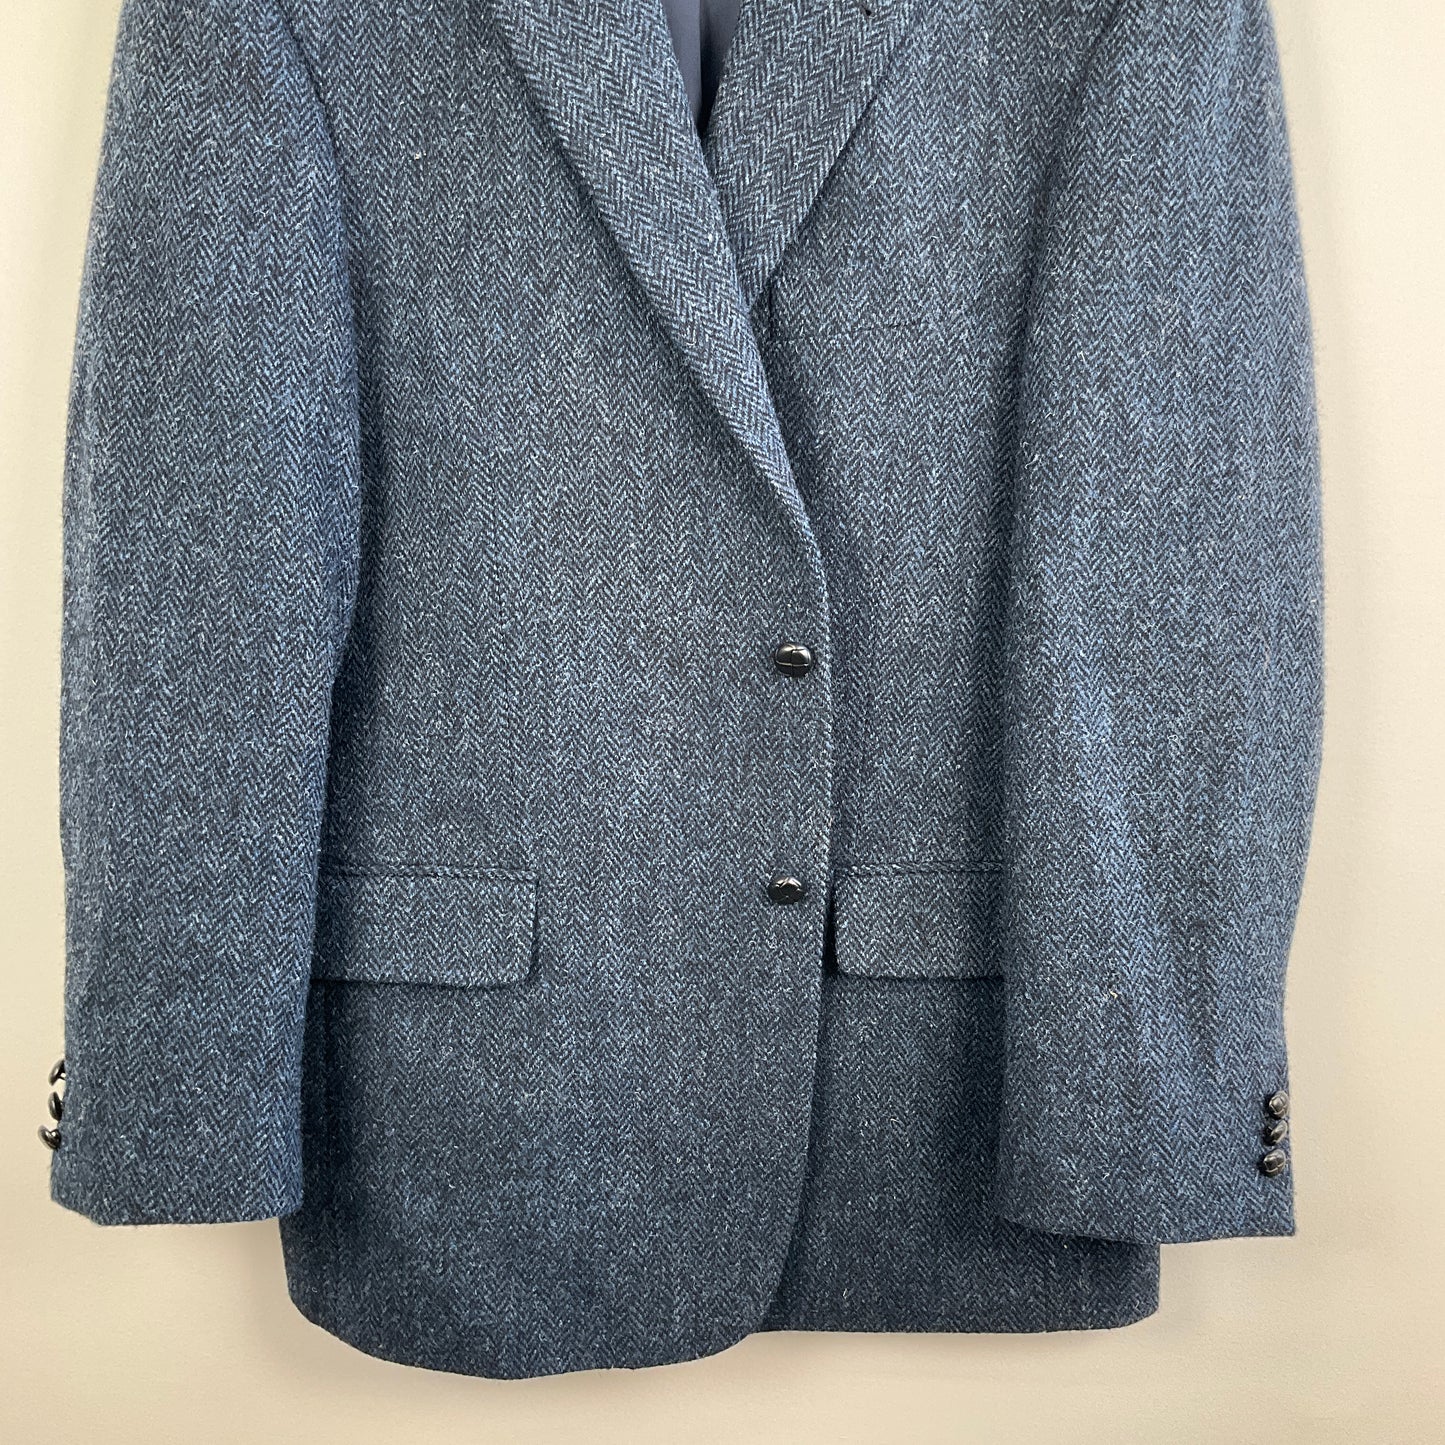 Orsini - Men's Wool Jacket